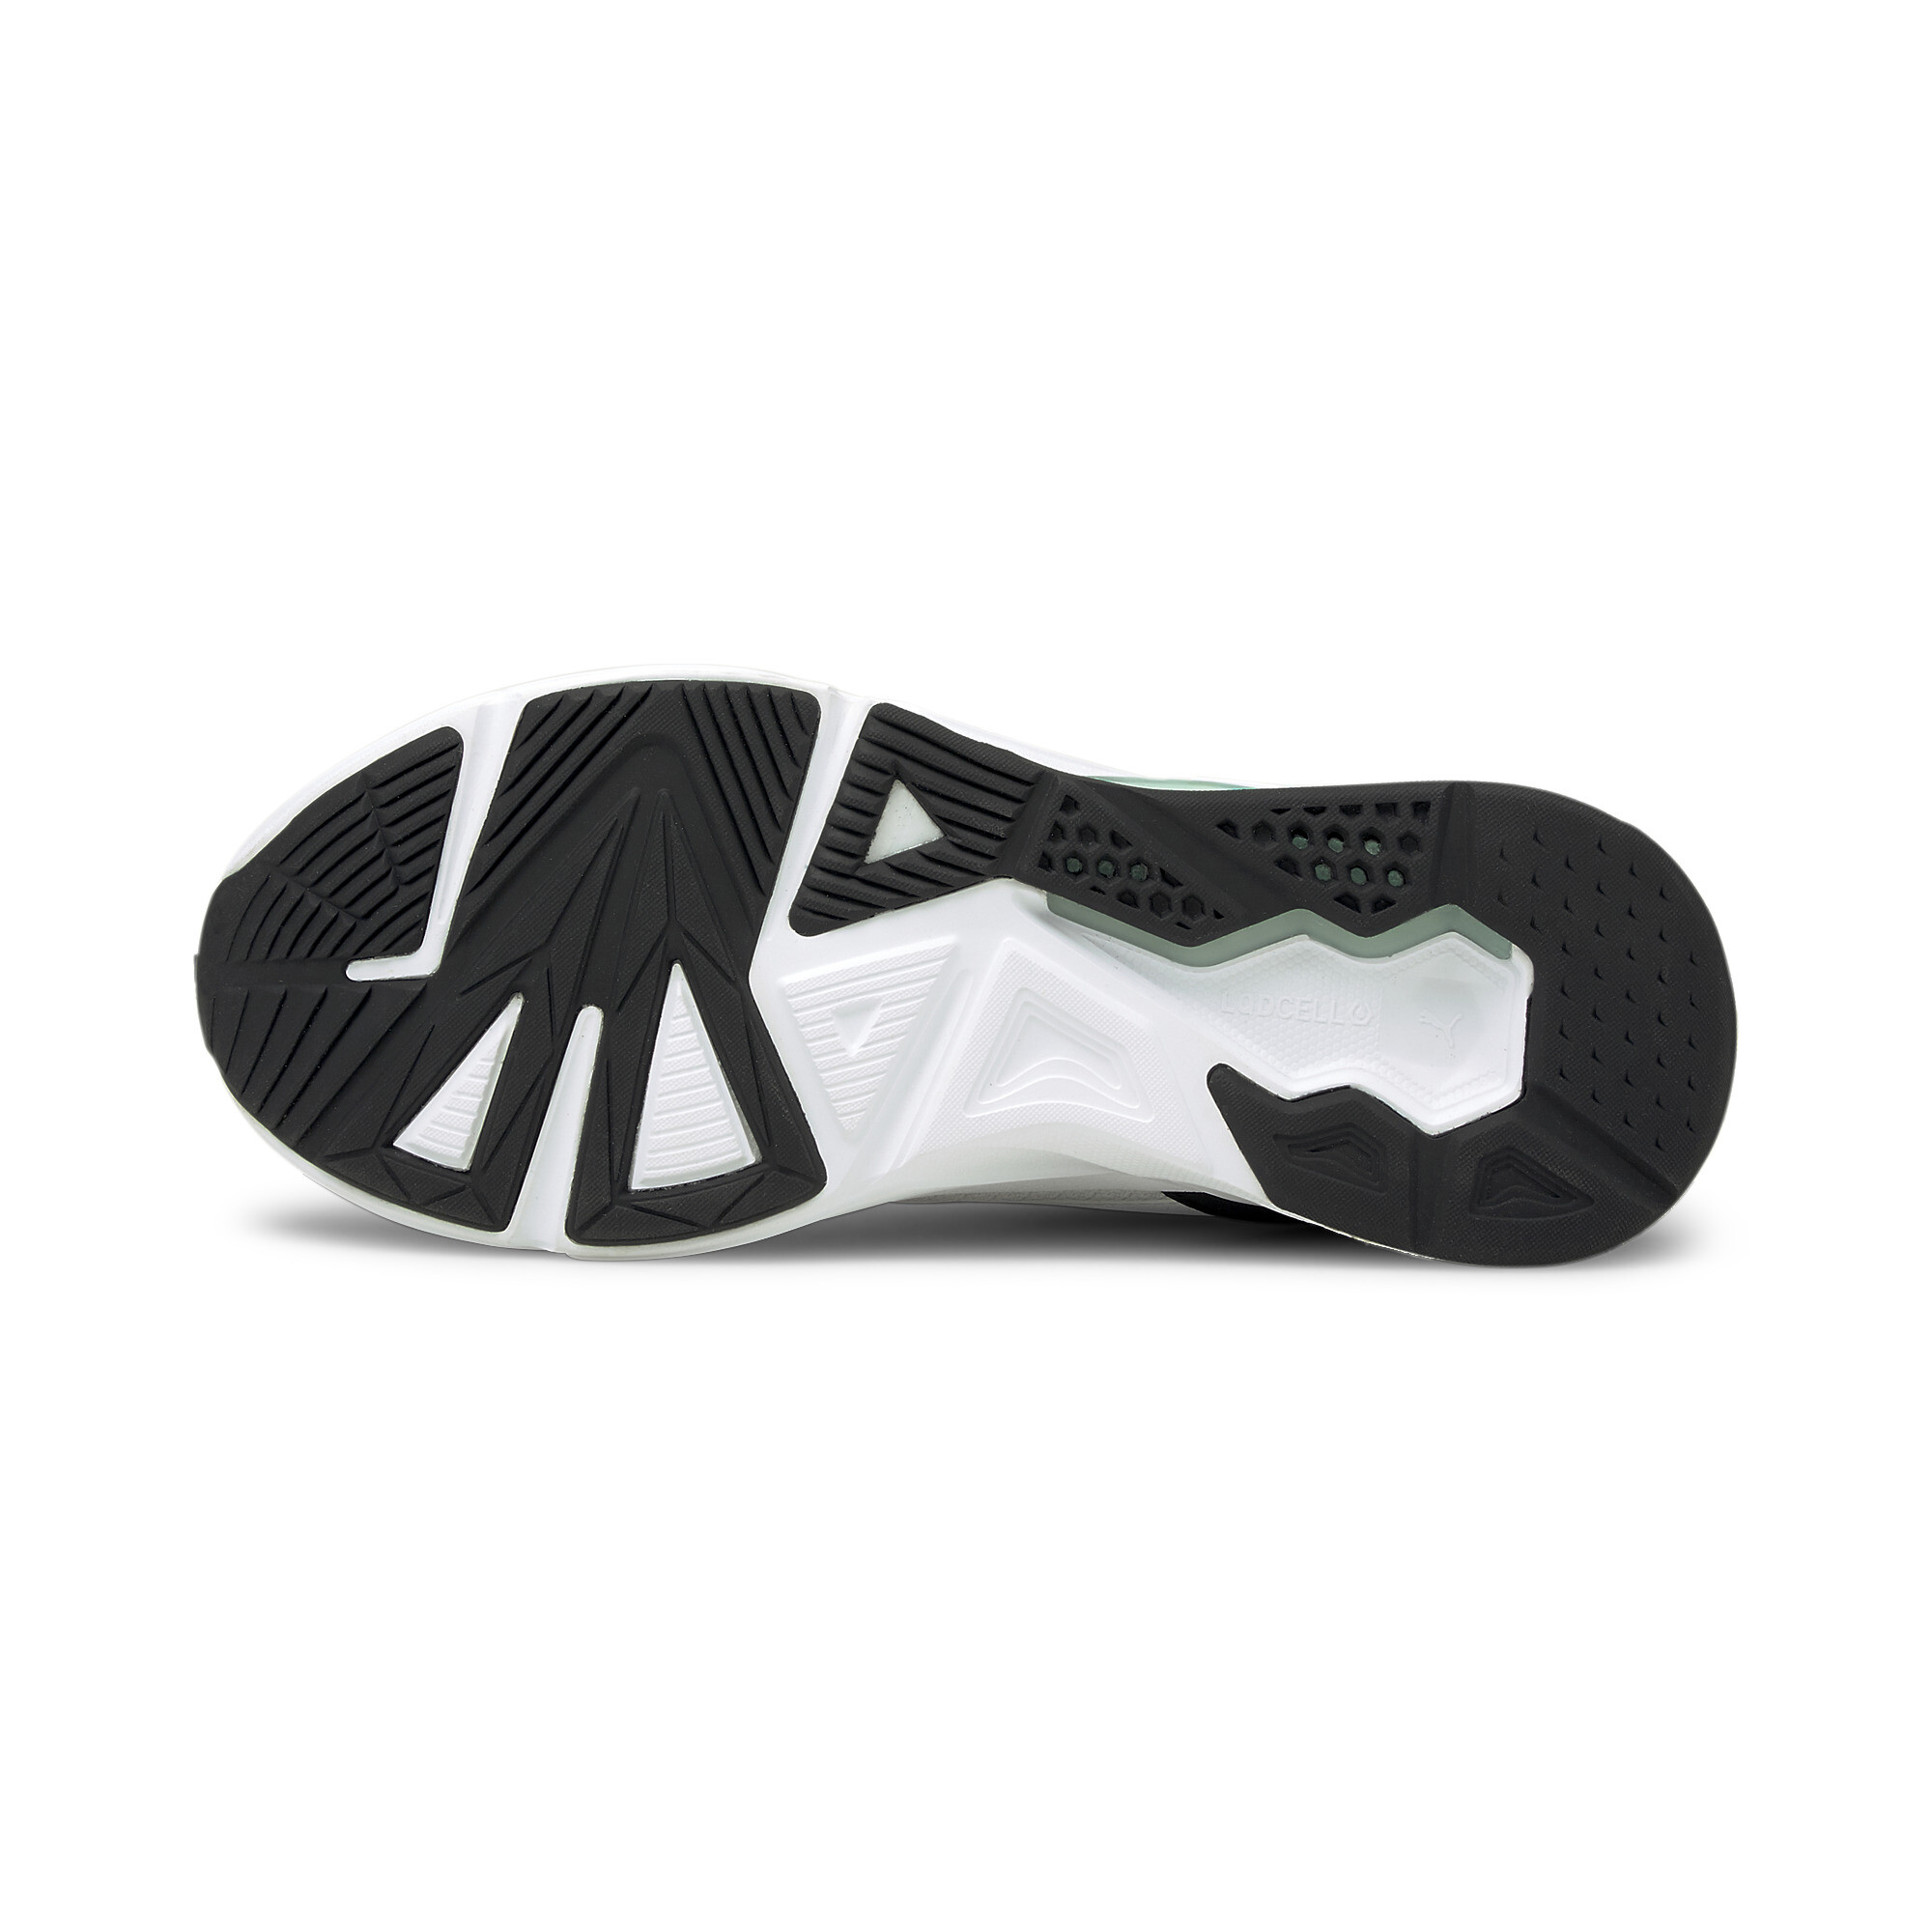 PUMA Women's LQDCELL Method Training Shoes | eBay